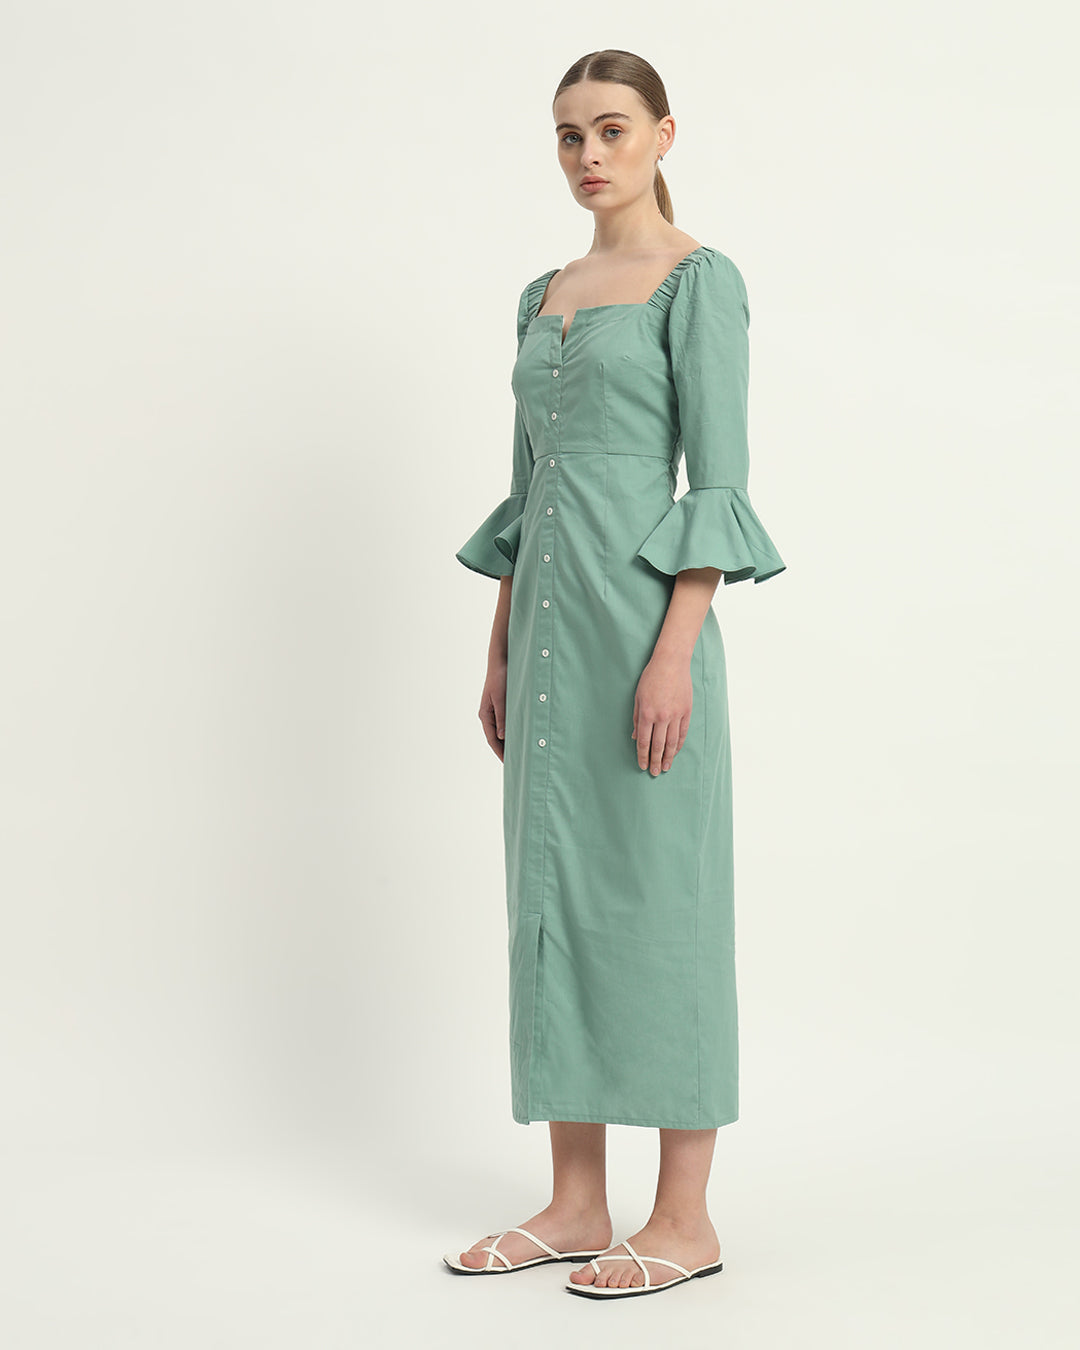 The Rosendale Mint Cotton Dress